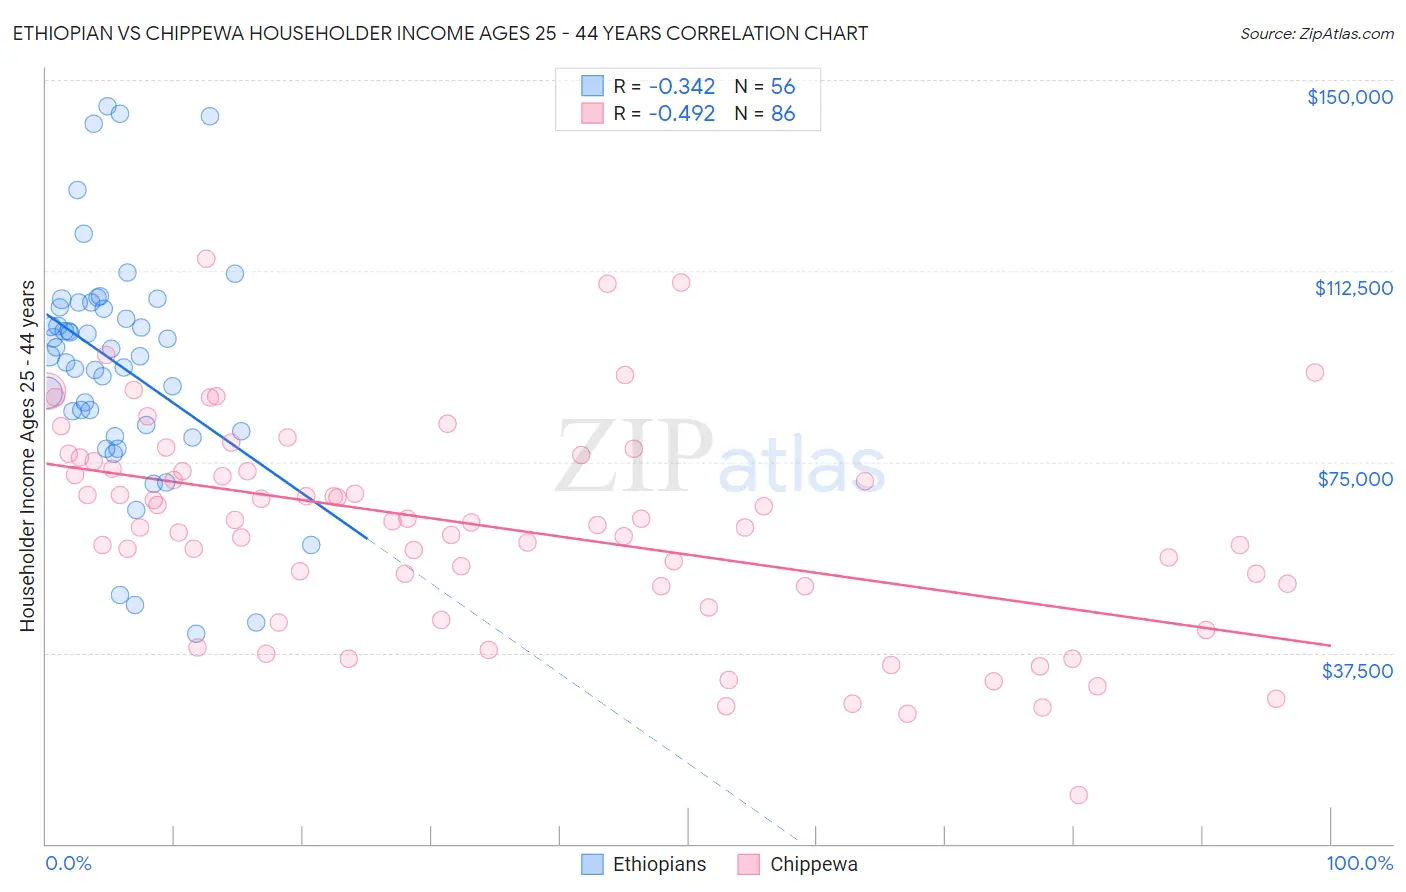 Ethiopian vs Chippewa Householder Income Ages 25 - 44 years